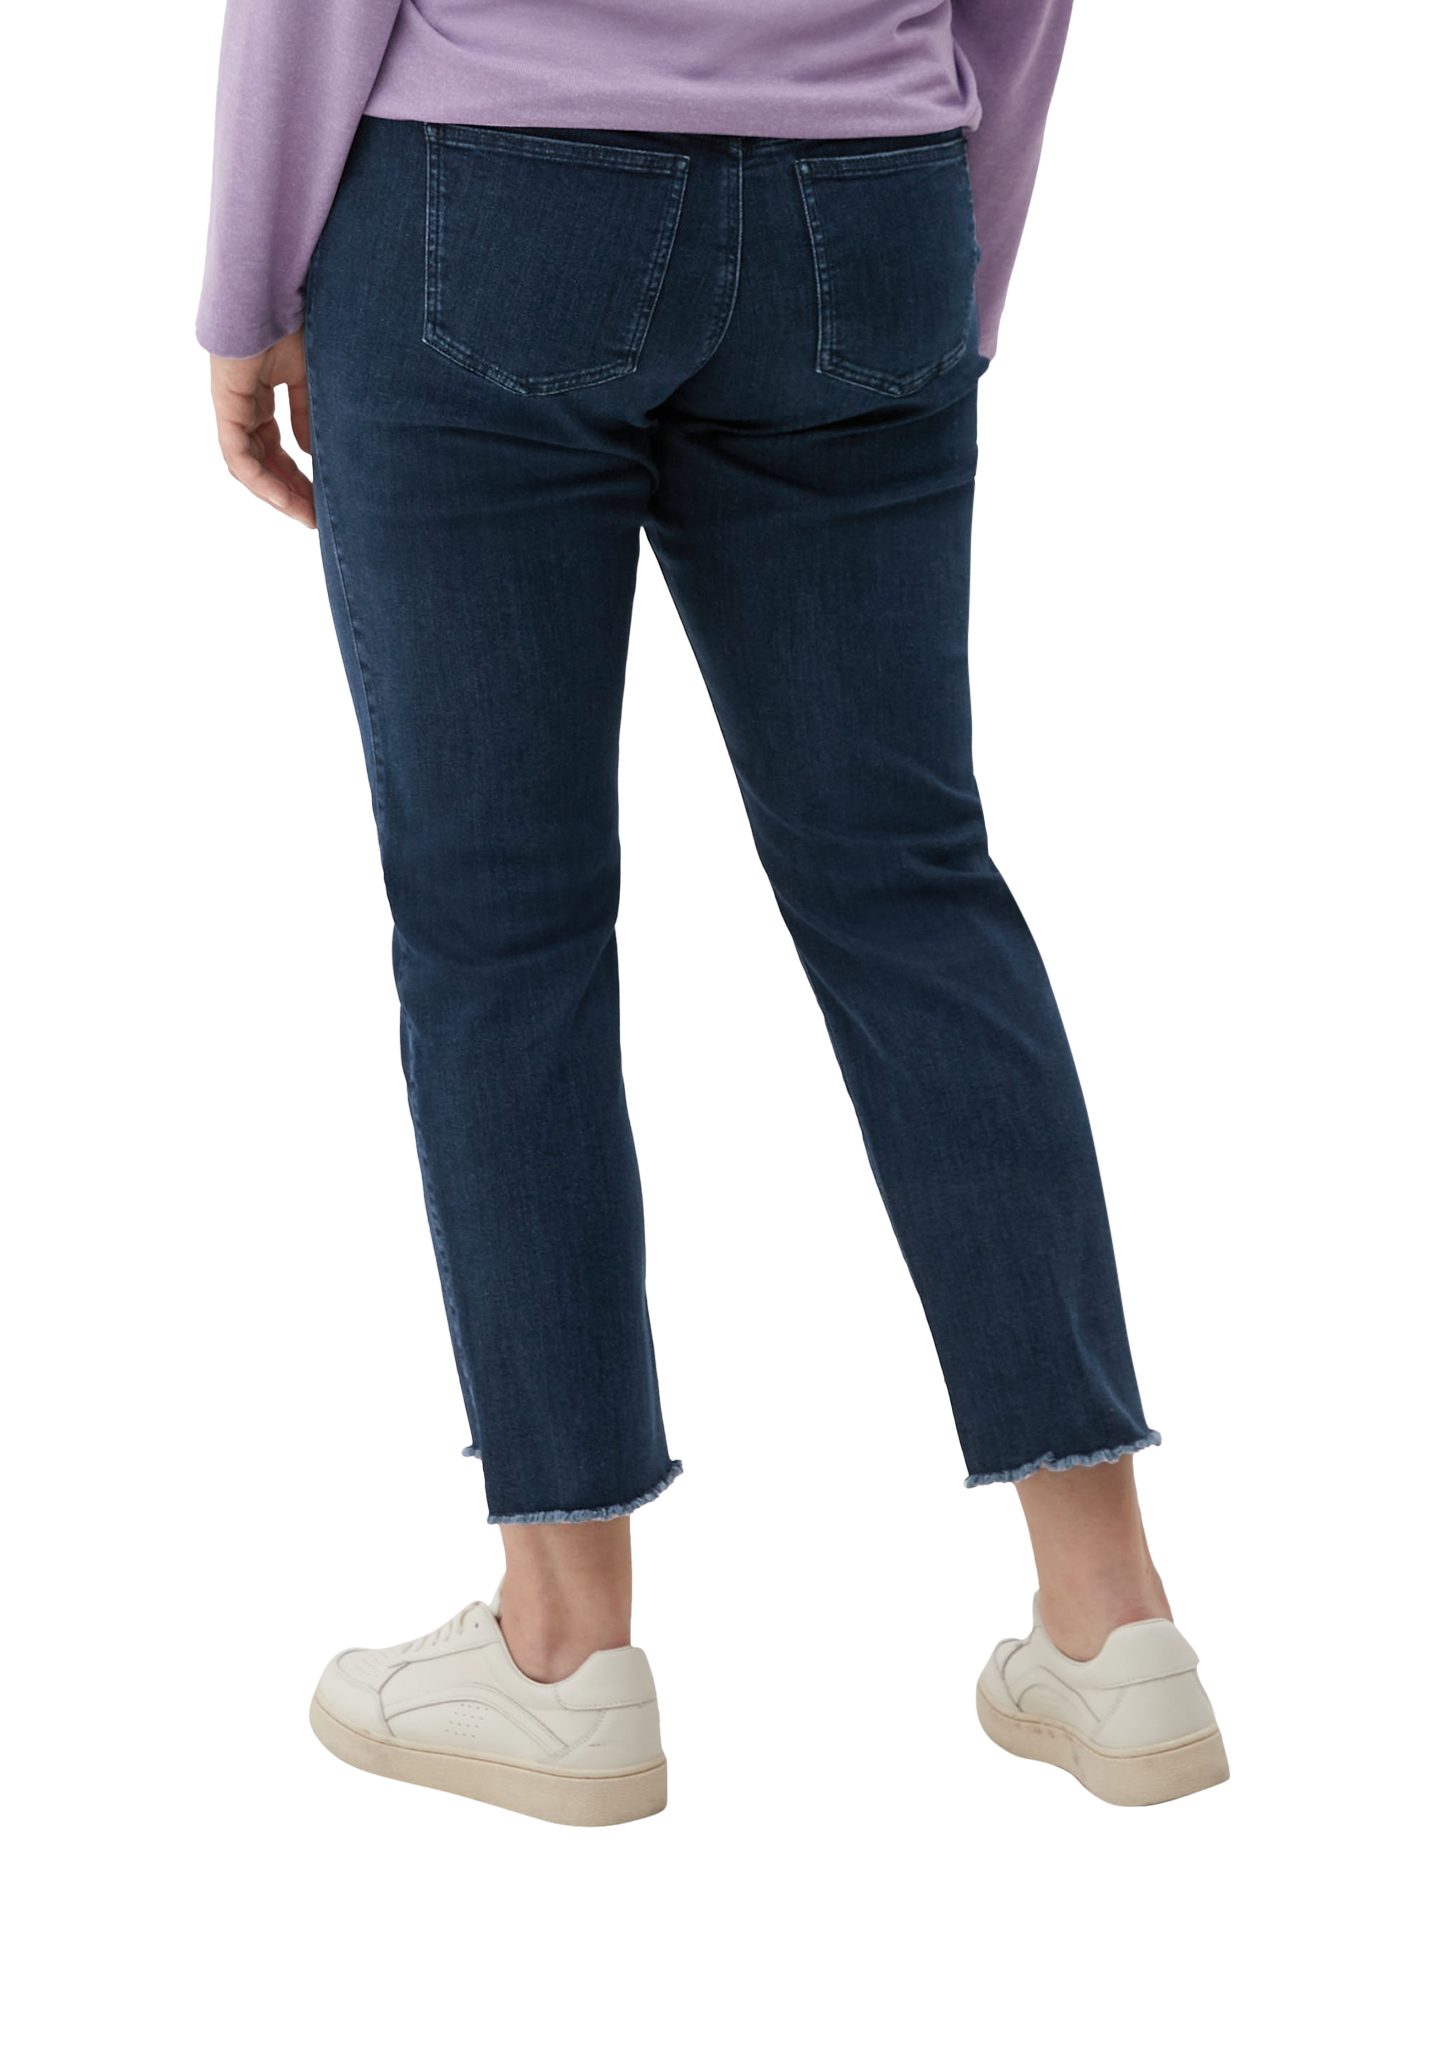 TRIANGLE Stoffhose / Slim tiefblau Slim / Fit / Leg Fransen Jeans Stickerei, Rise Mid Waschung